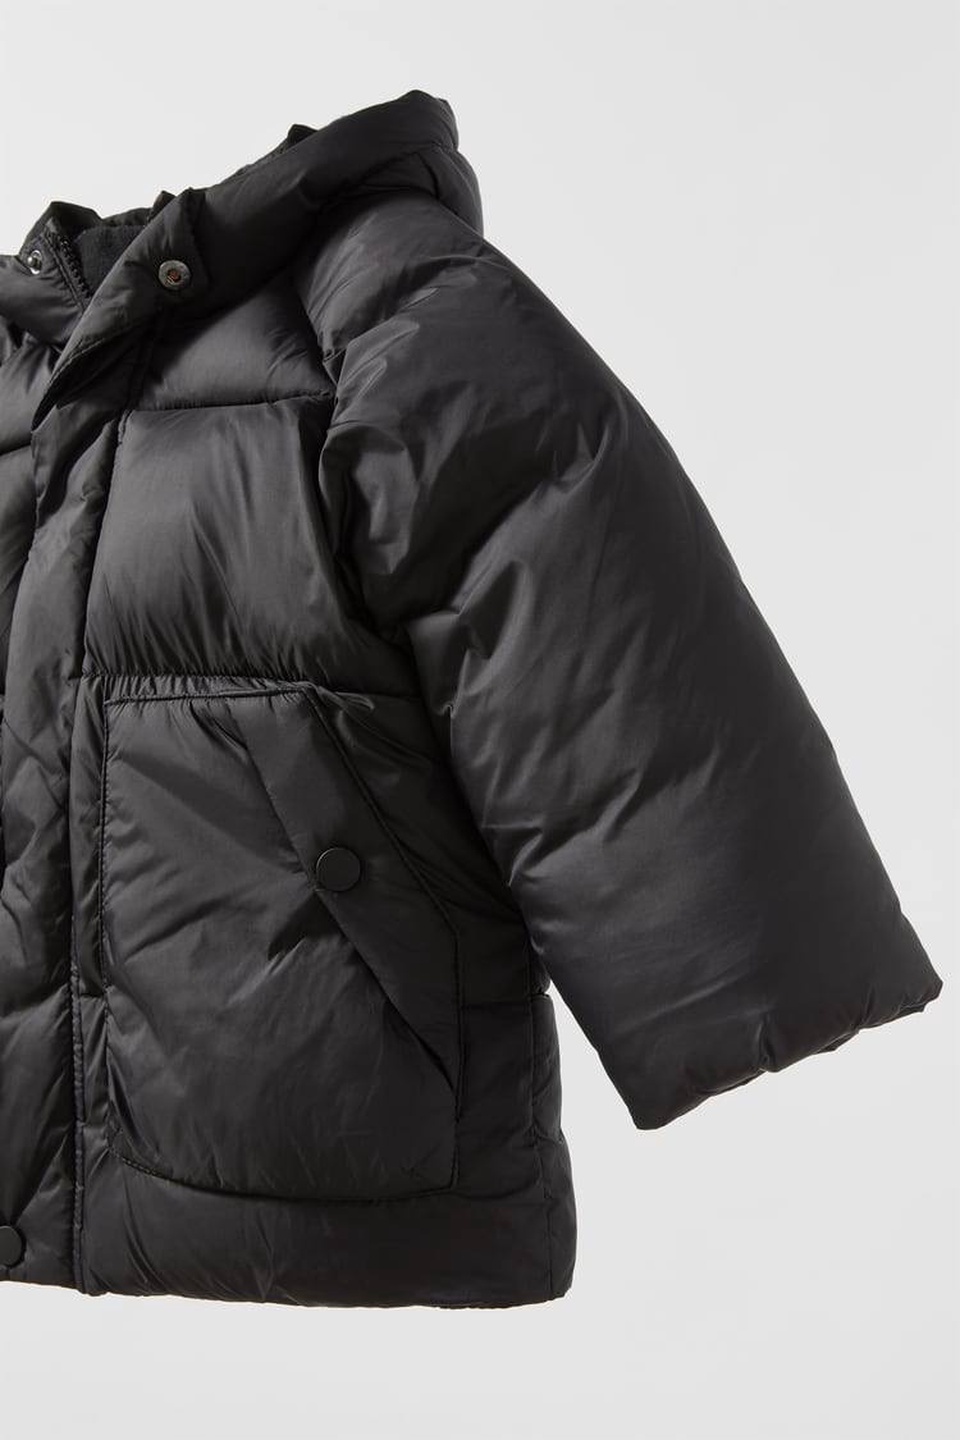 Куртка Zara - 2 699 ₽, заказать онлайн.